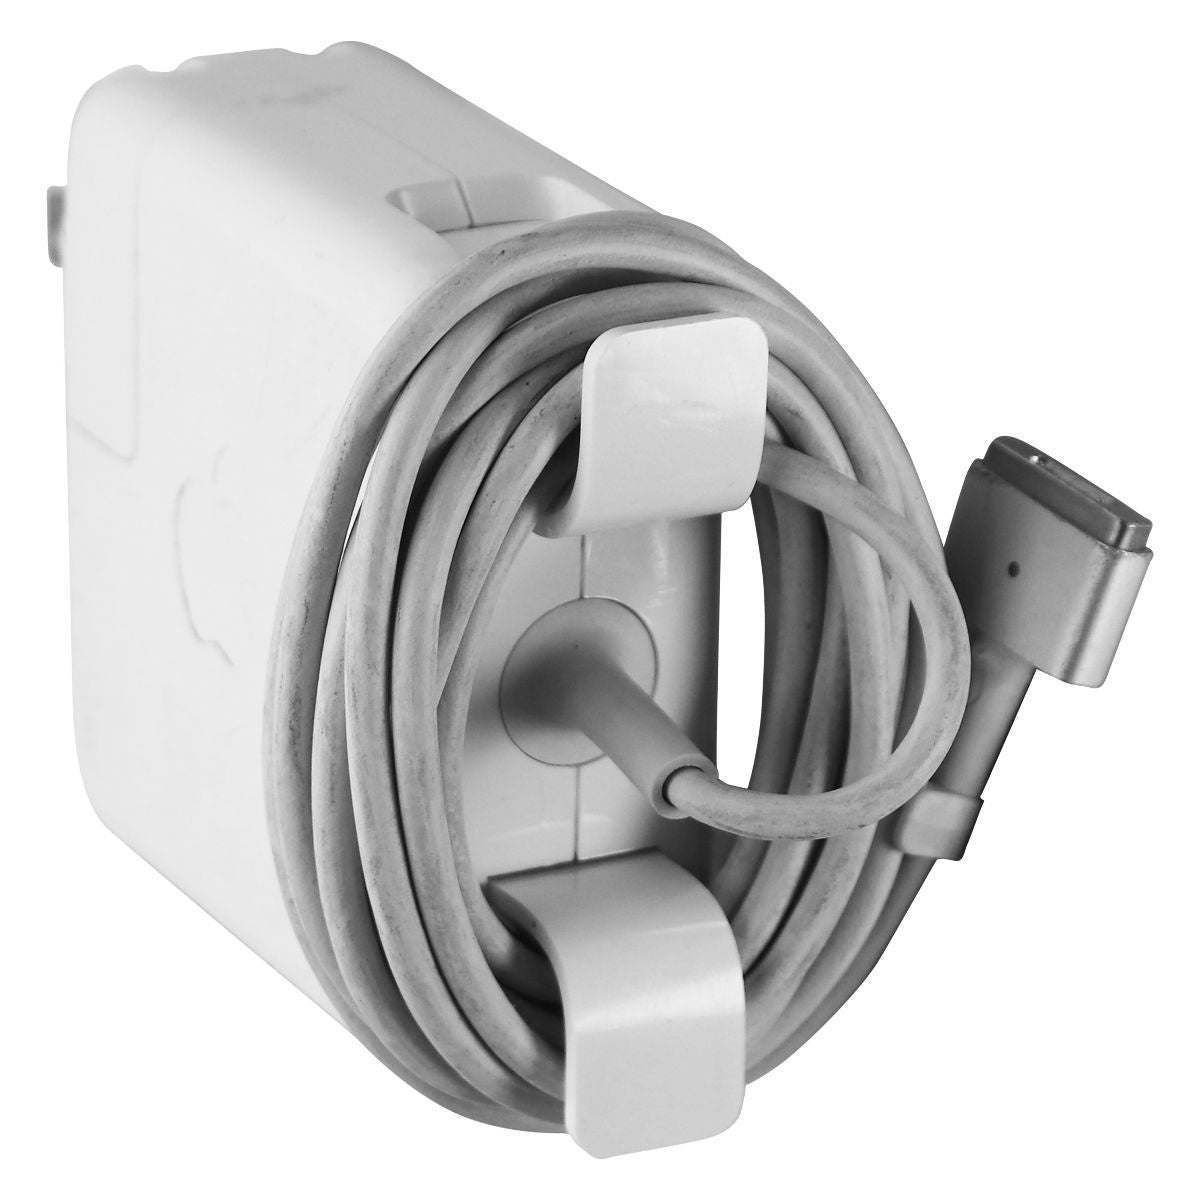 Apple (60-Watt) MagSafe 2 Power Adapter (A1435) with 3-Prong & Folding Plug